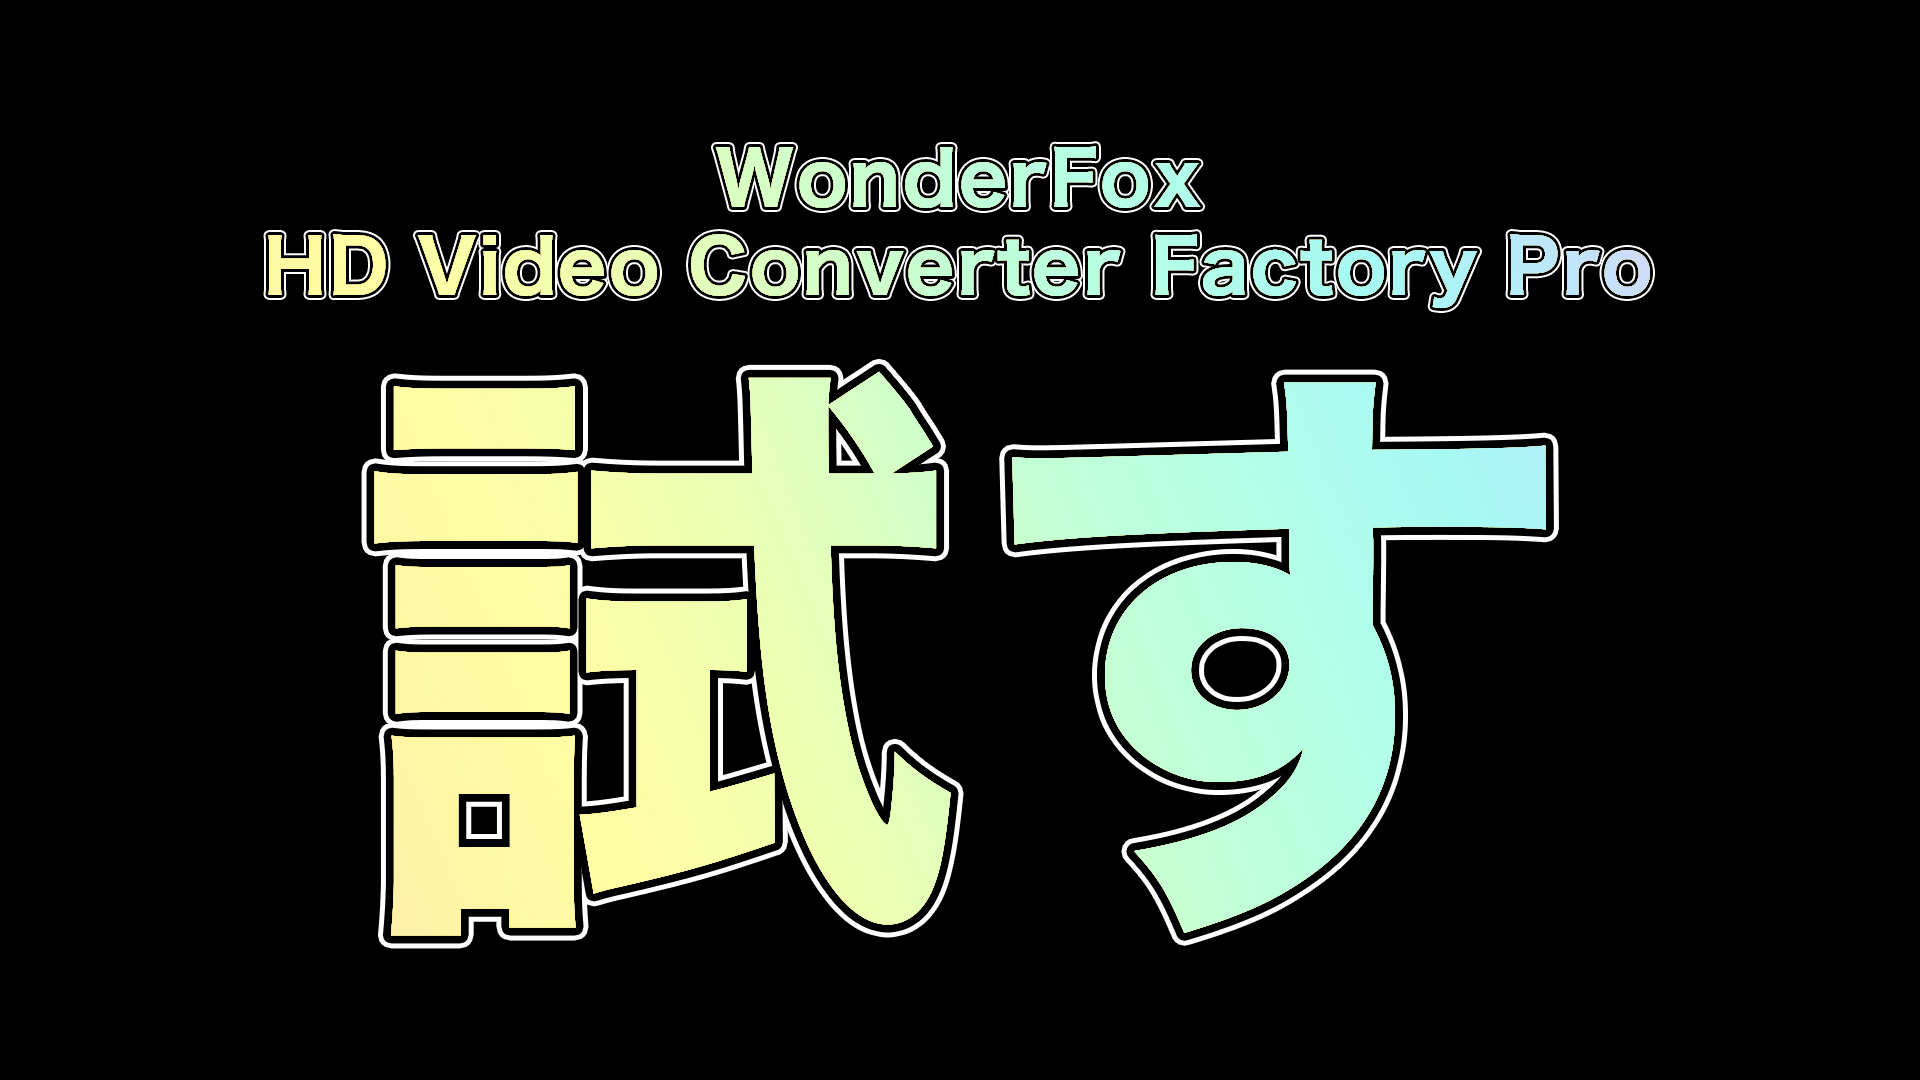 Head - 動画圧縮ソフト「WonderFox HD Video Converter Factory Pro」を試してみた。